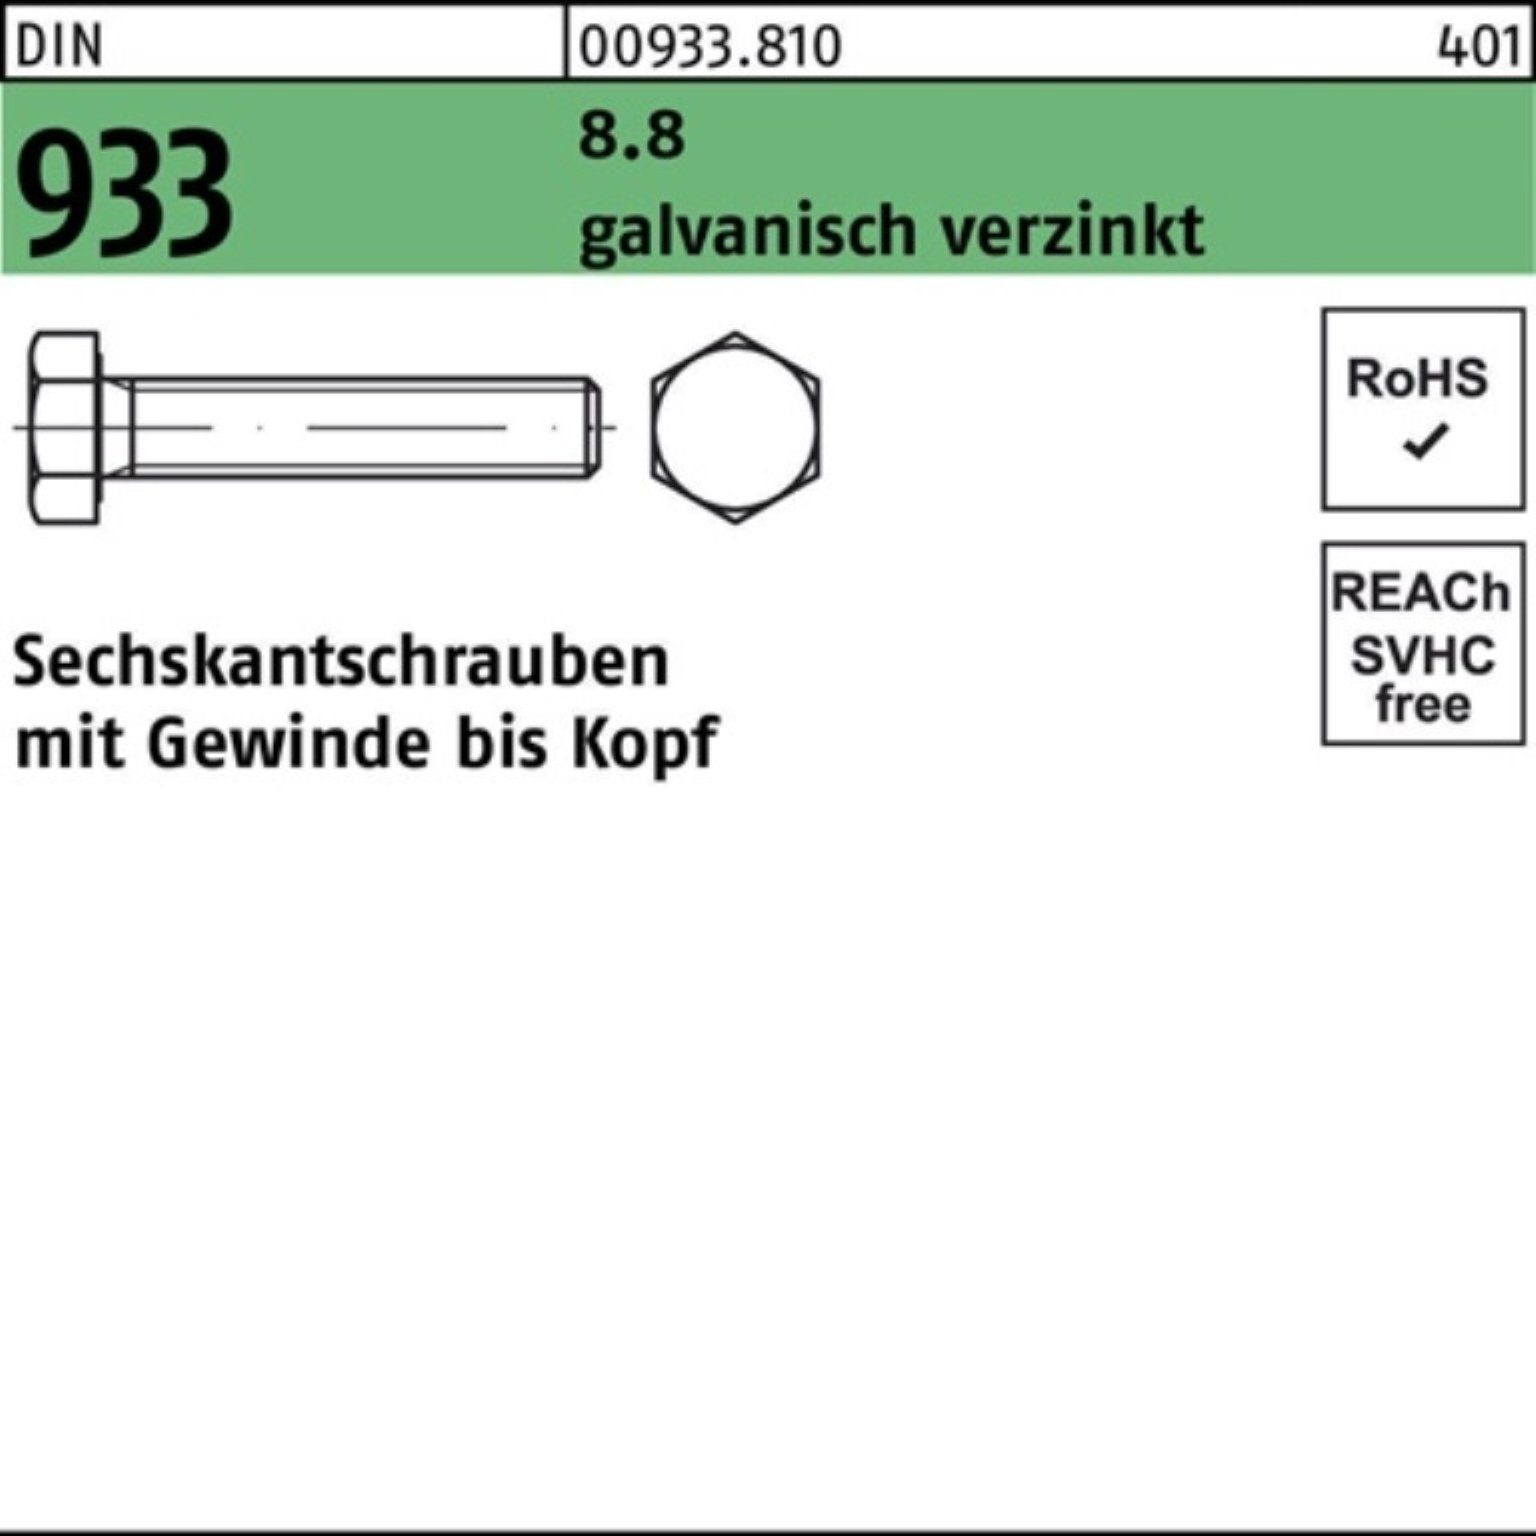 Reyher Sechskantschraube Sechskantschraube M33x galv.verz. 100er VG 933 160 1 DIN Stü Pack 8.8